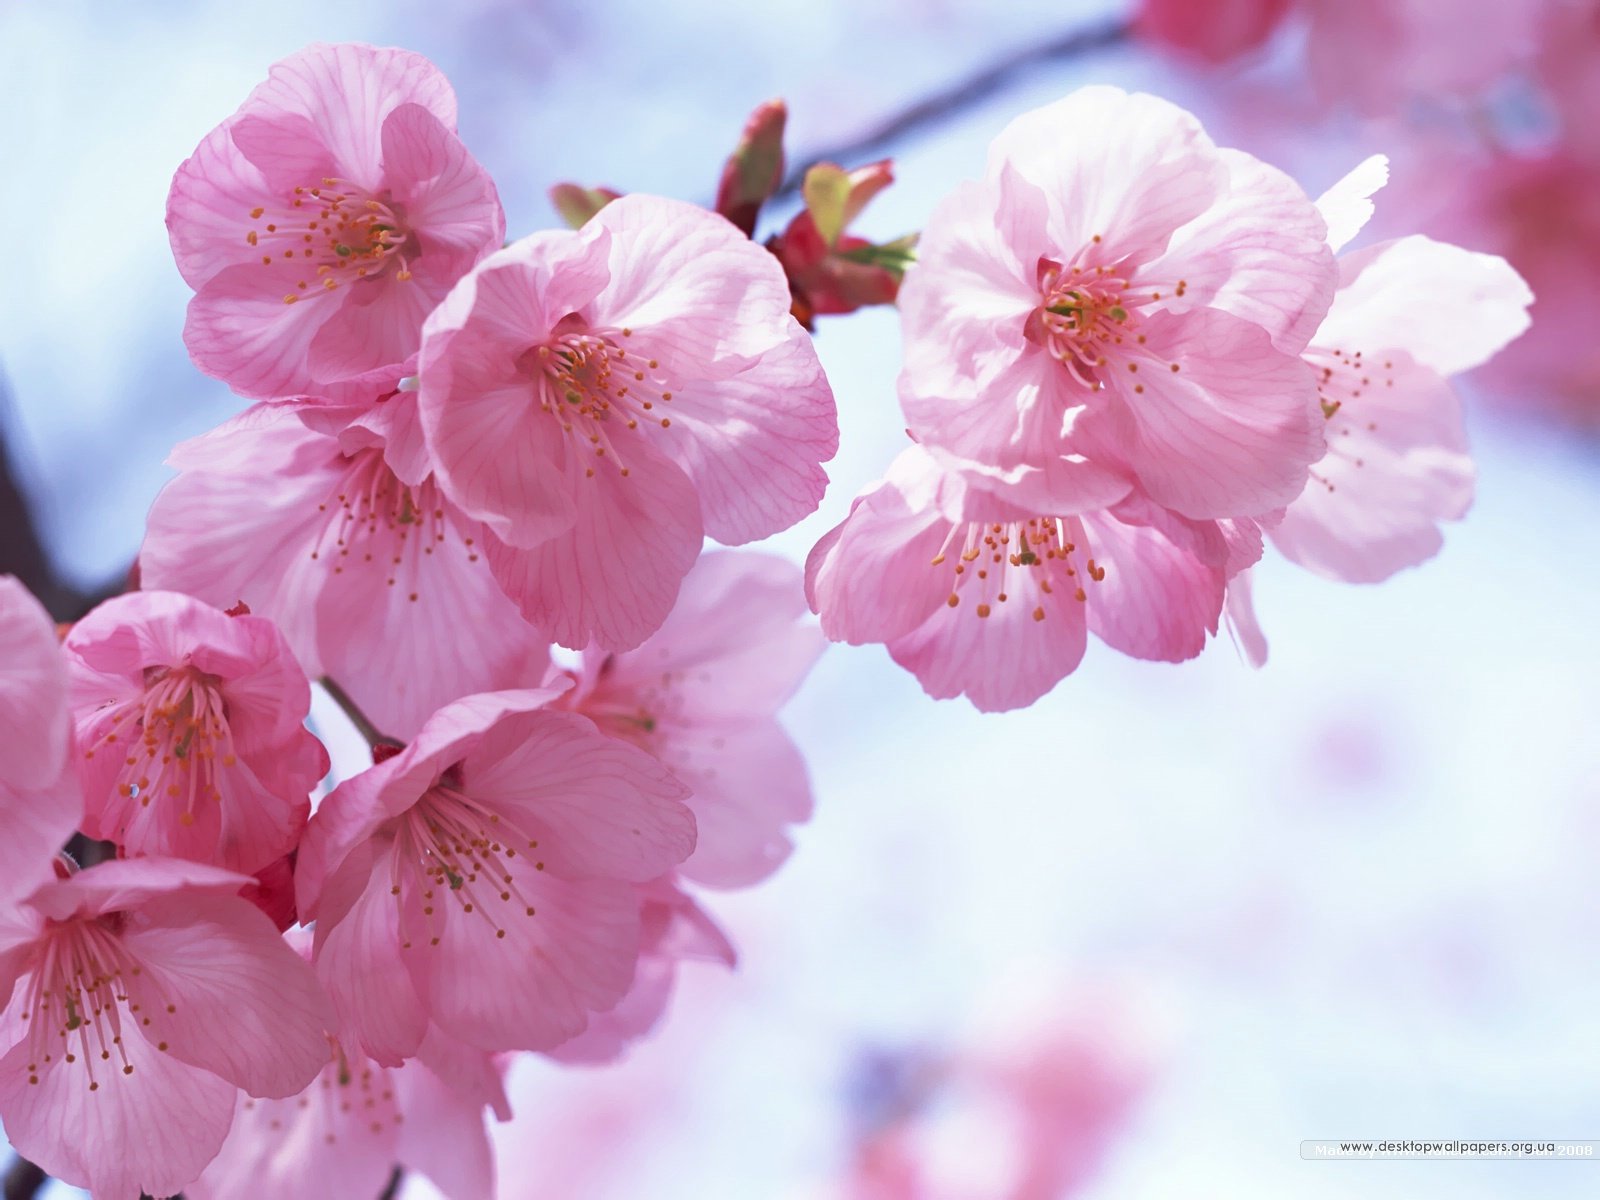 Wallpaper Desktop Cherry Blossom Flowers